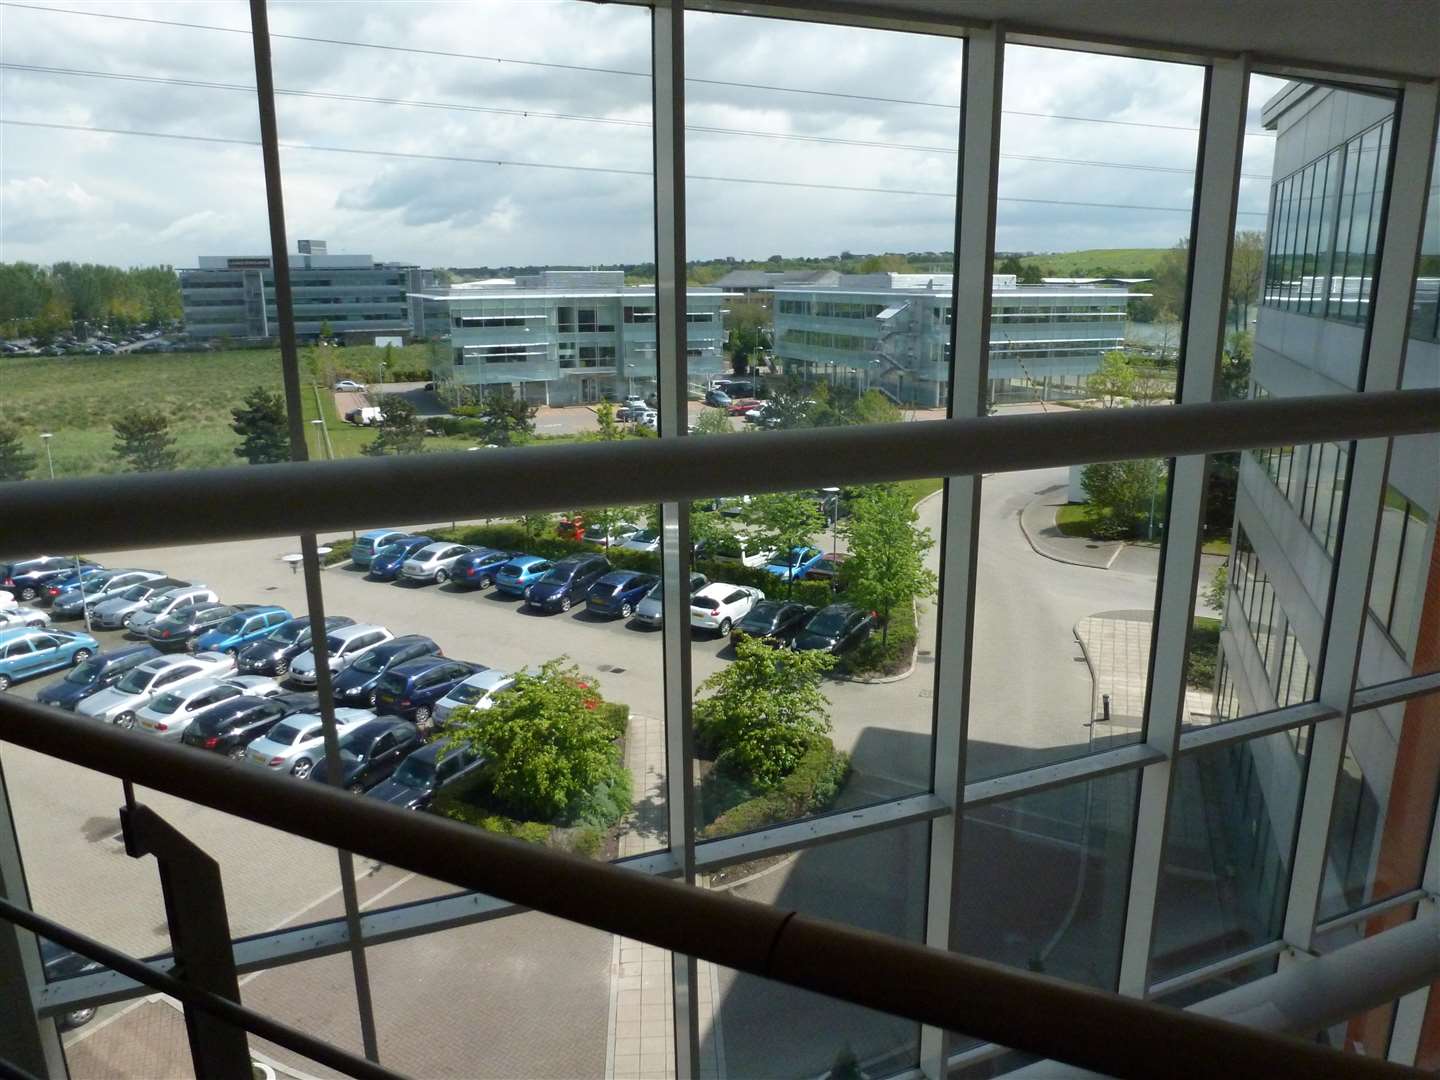 Crossways in Dartford has seen demand for bigger office space